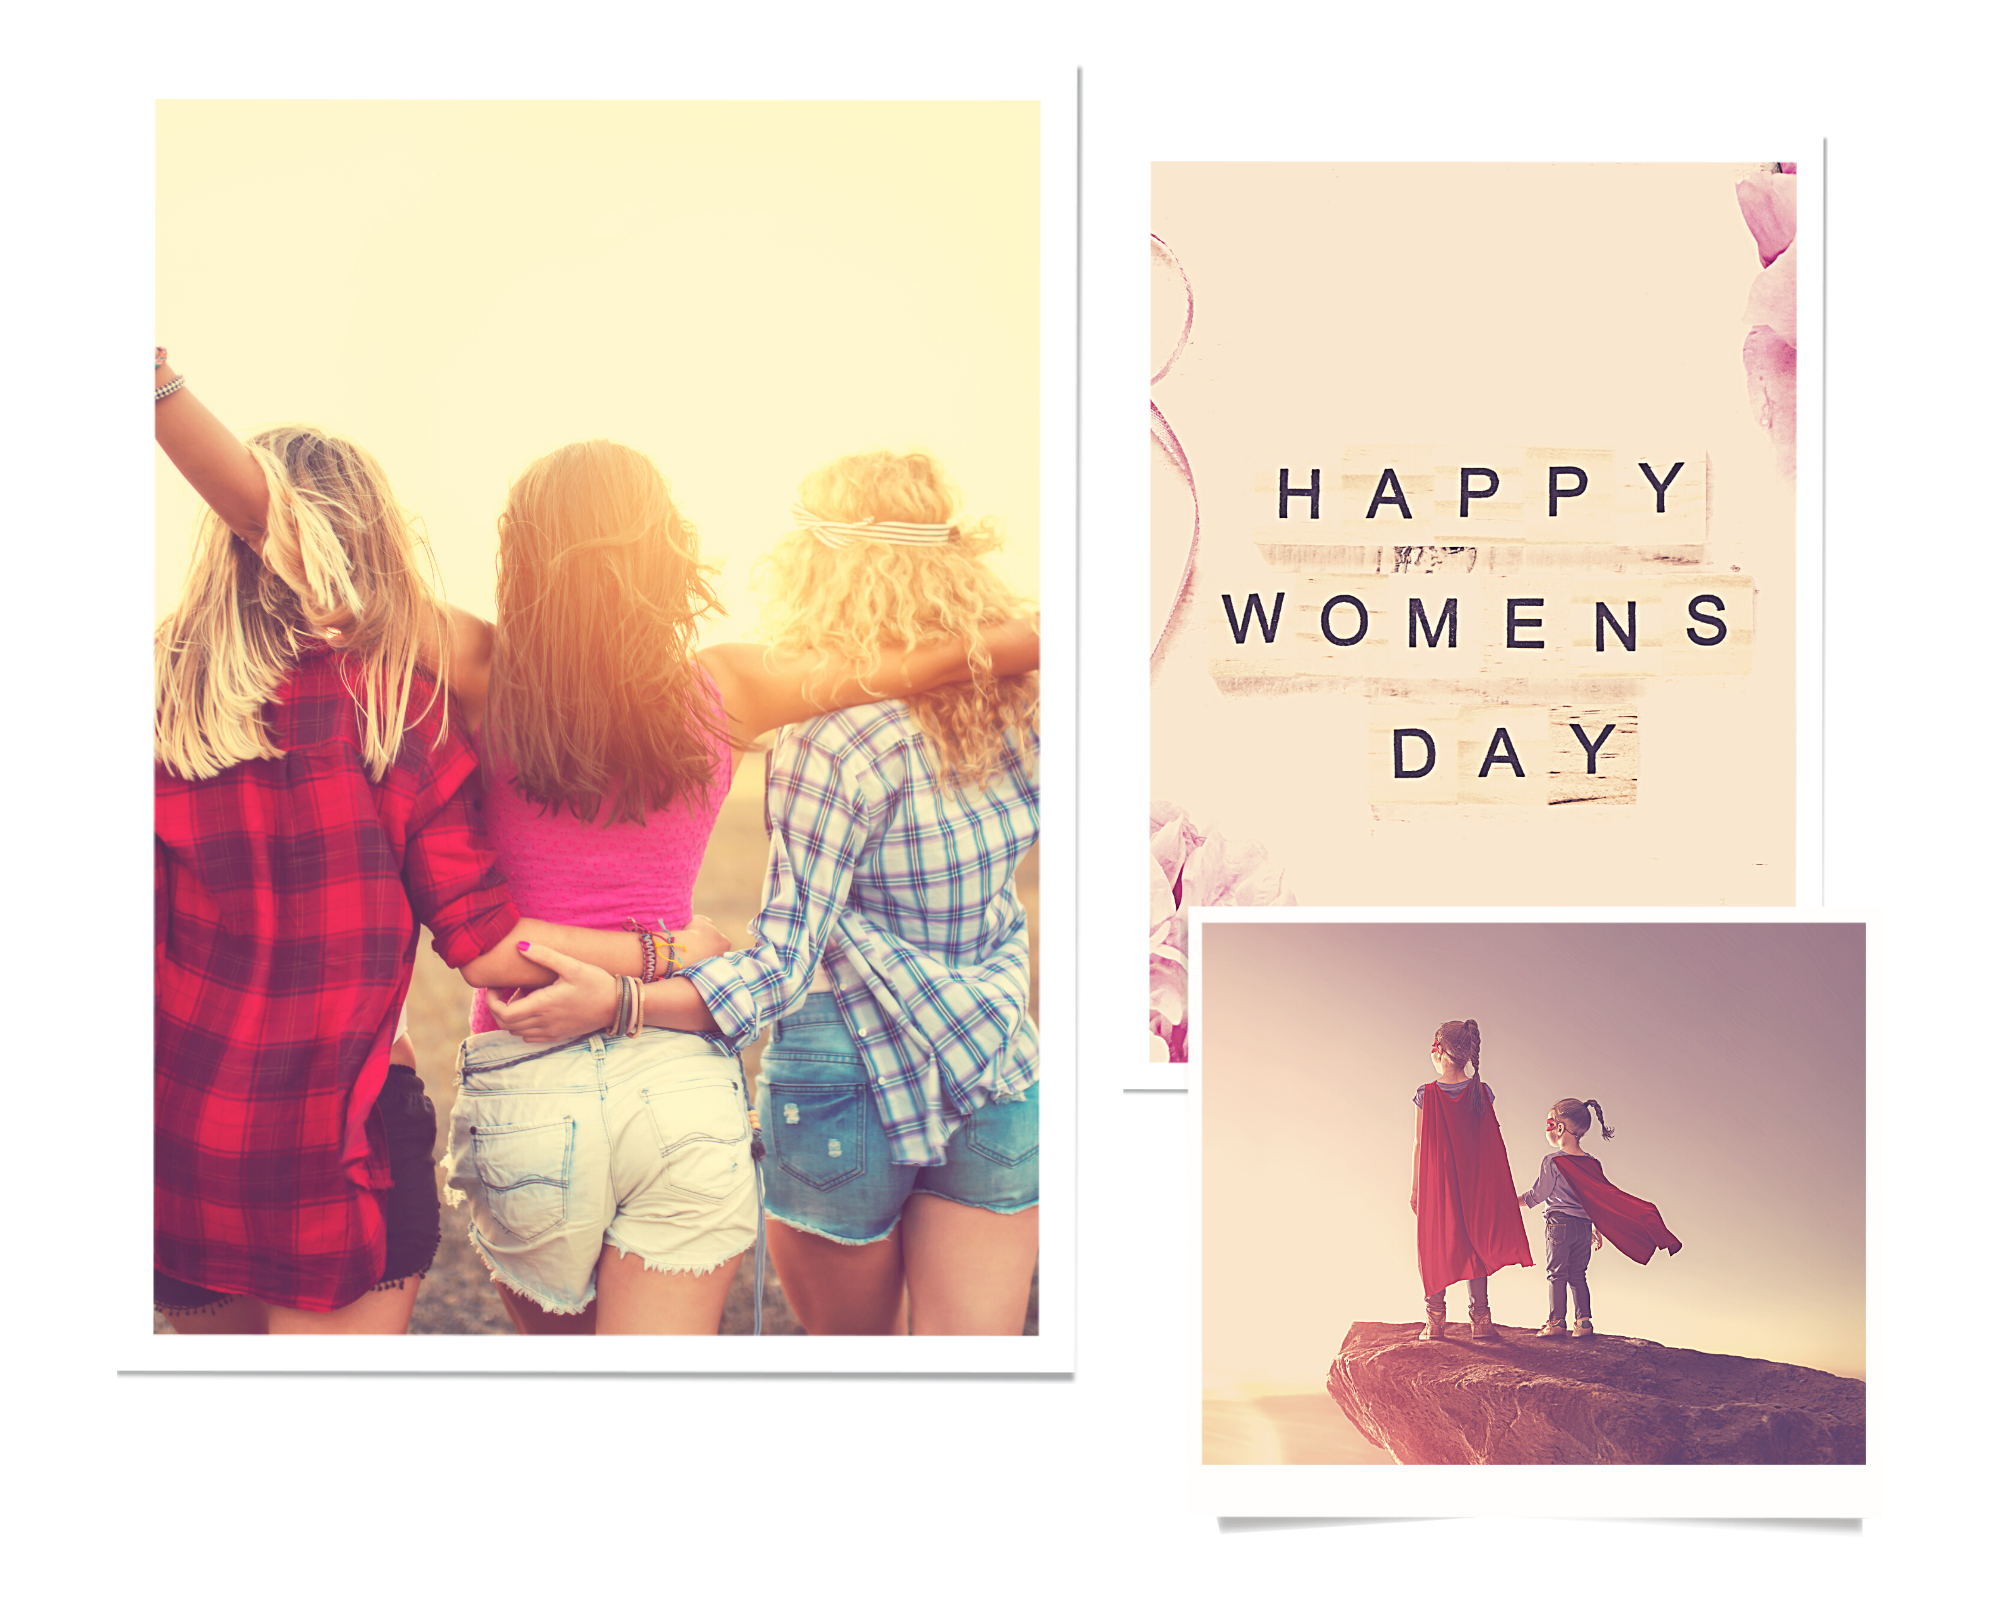 9 Empowering Ways To Celebrate International Women's Day!